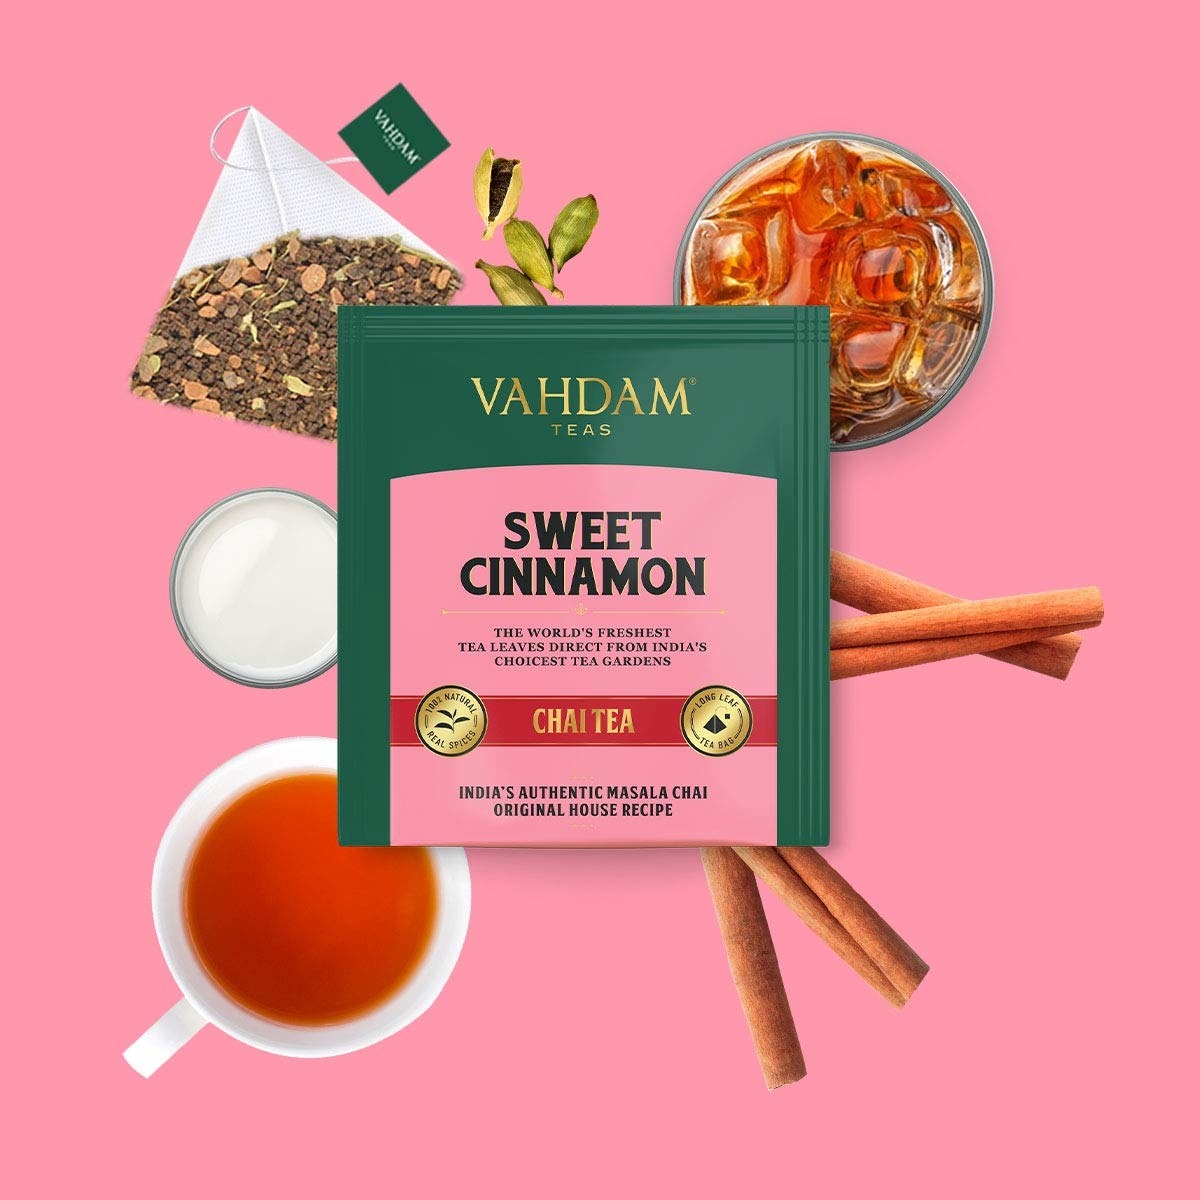 Vahdam sweet cinnamon chai tea packet stylized with cinnamon sticks, a mug and loose leaf tea